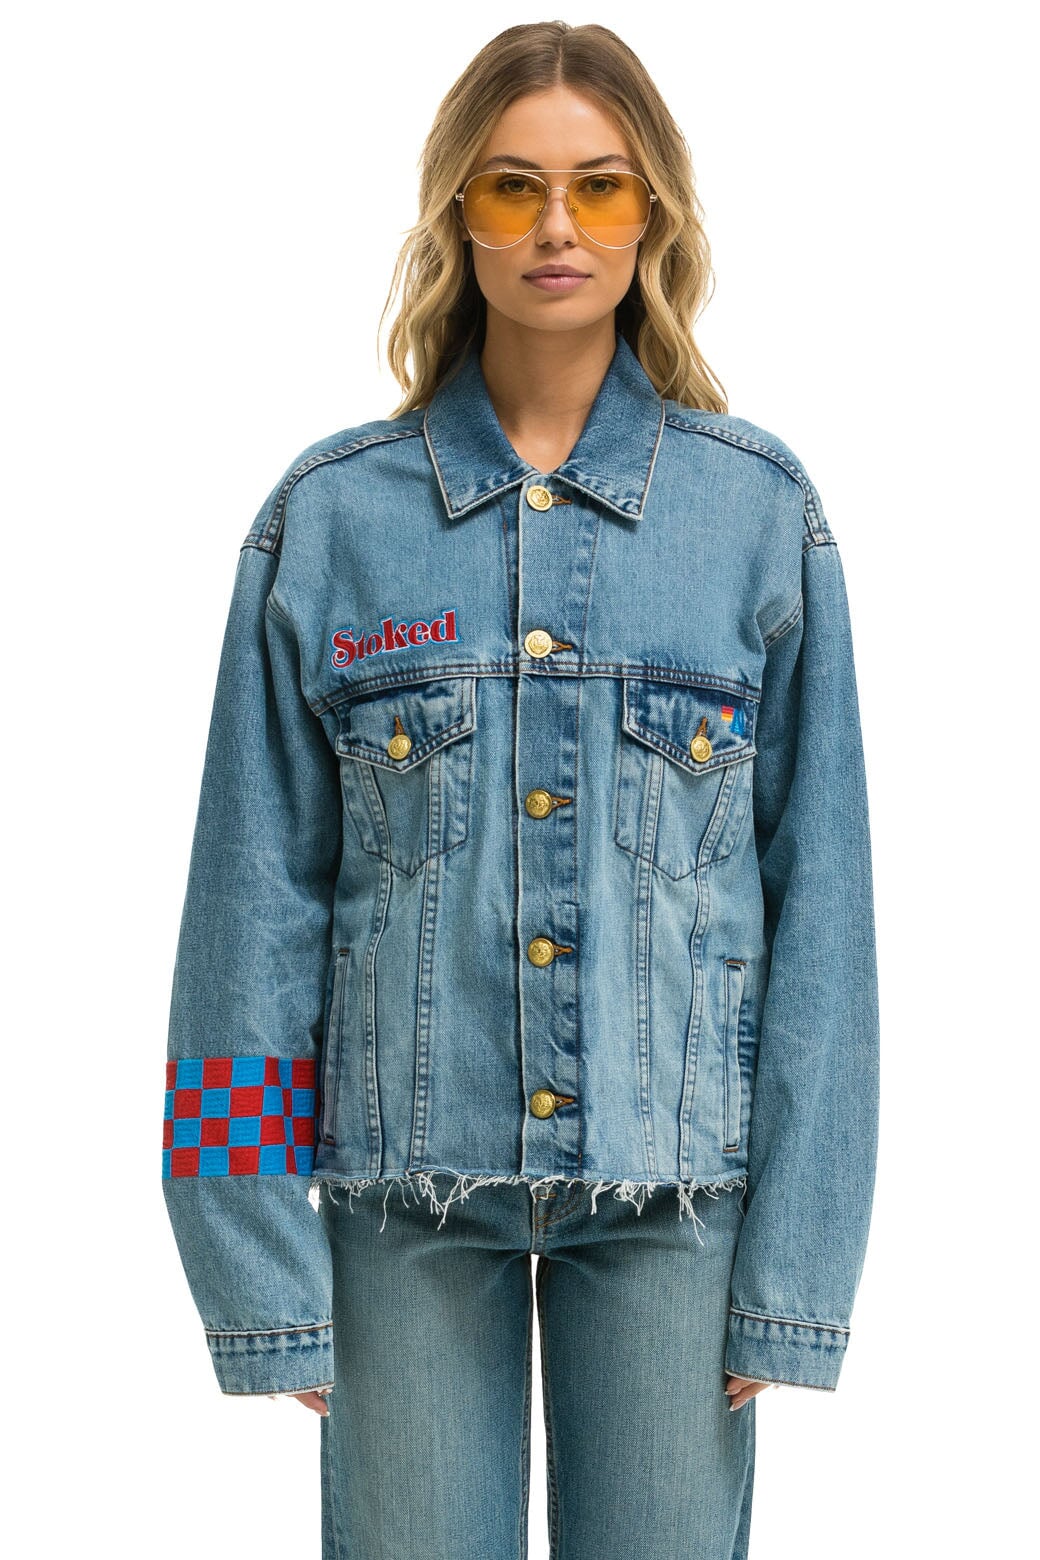  Jeans Mens Coat Jacket for Man Retro Woman Denim Jeans Smiley  Smile Face,Blue,XL : Everything Else